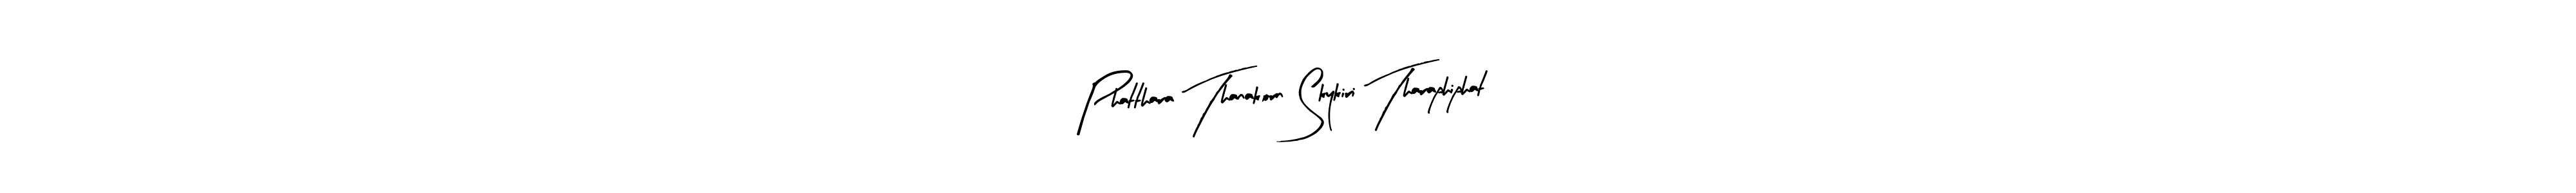 Phatthara Thanakorn Skykiri Tharaphiphat stylish signature style. Best Handwritten Sign (Arty Signature) for my name. Handwritten Signature Collection Ideas for my name Phatthara Thanakorn Skykiri Tharaphiphat. Phatthara Thanakorn Skykiri Tharaphiphat signature style 8 images and pictures png